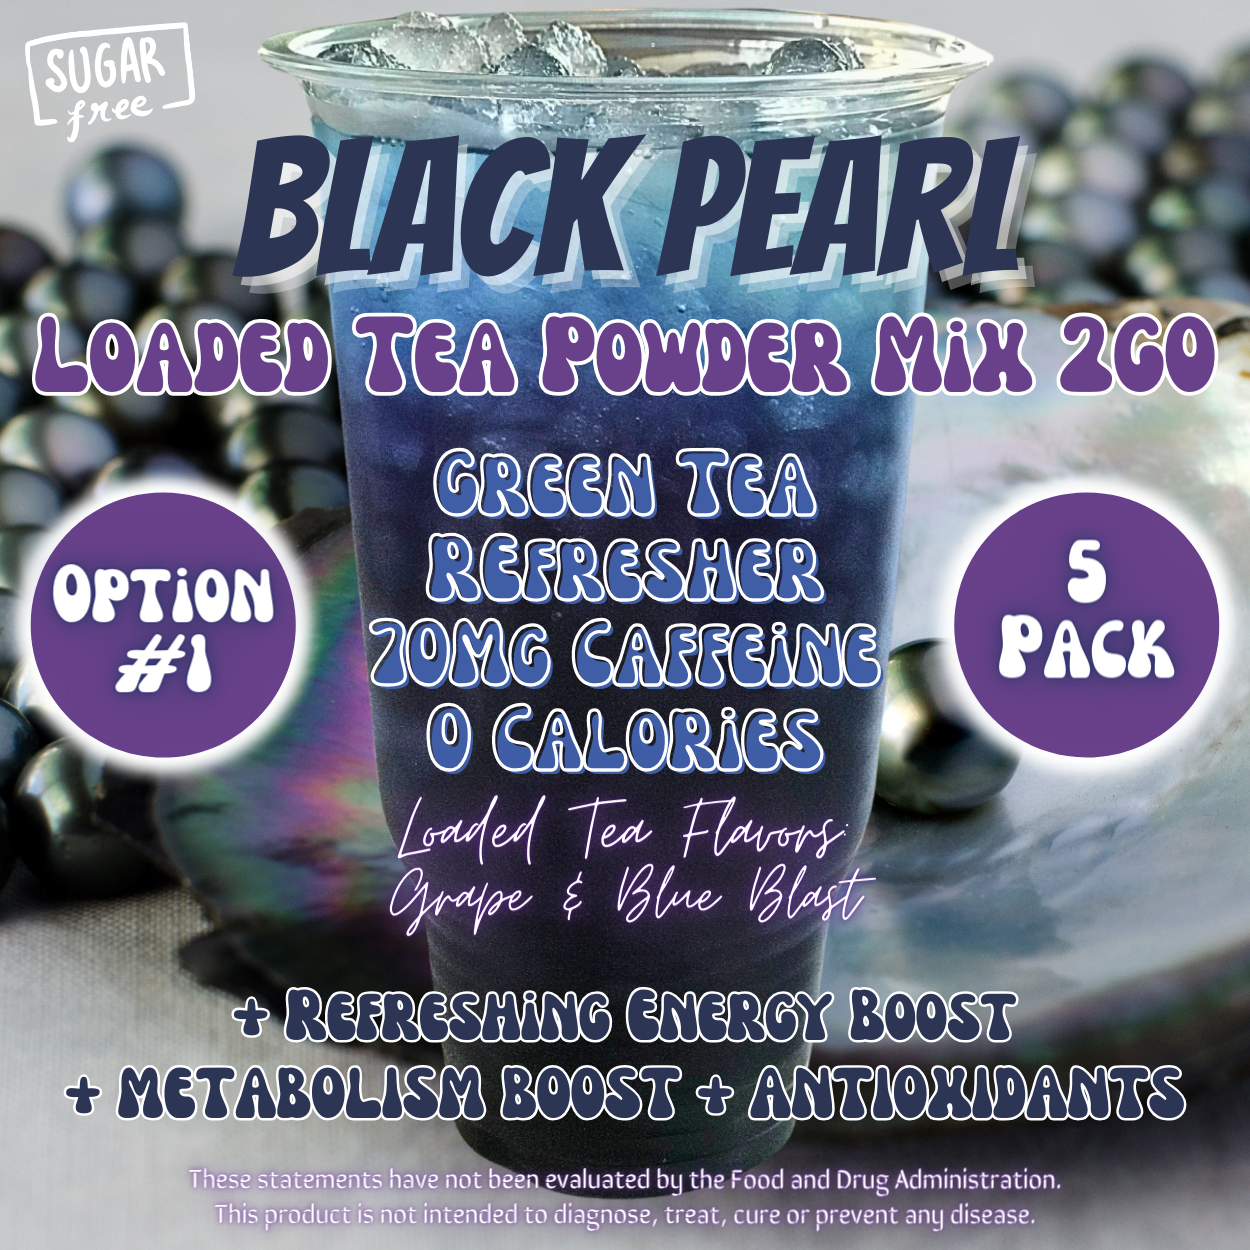 Black Pearl: Loaded Tea Powder Mix 2GO Packets